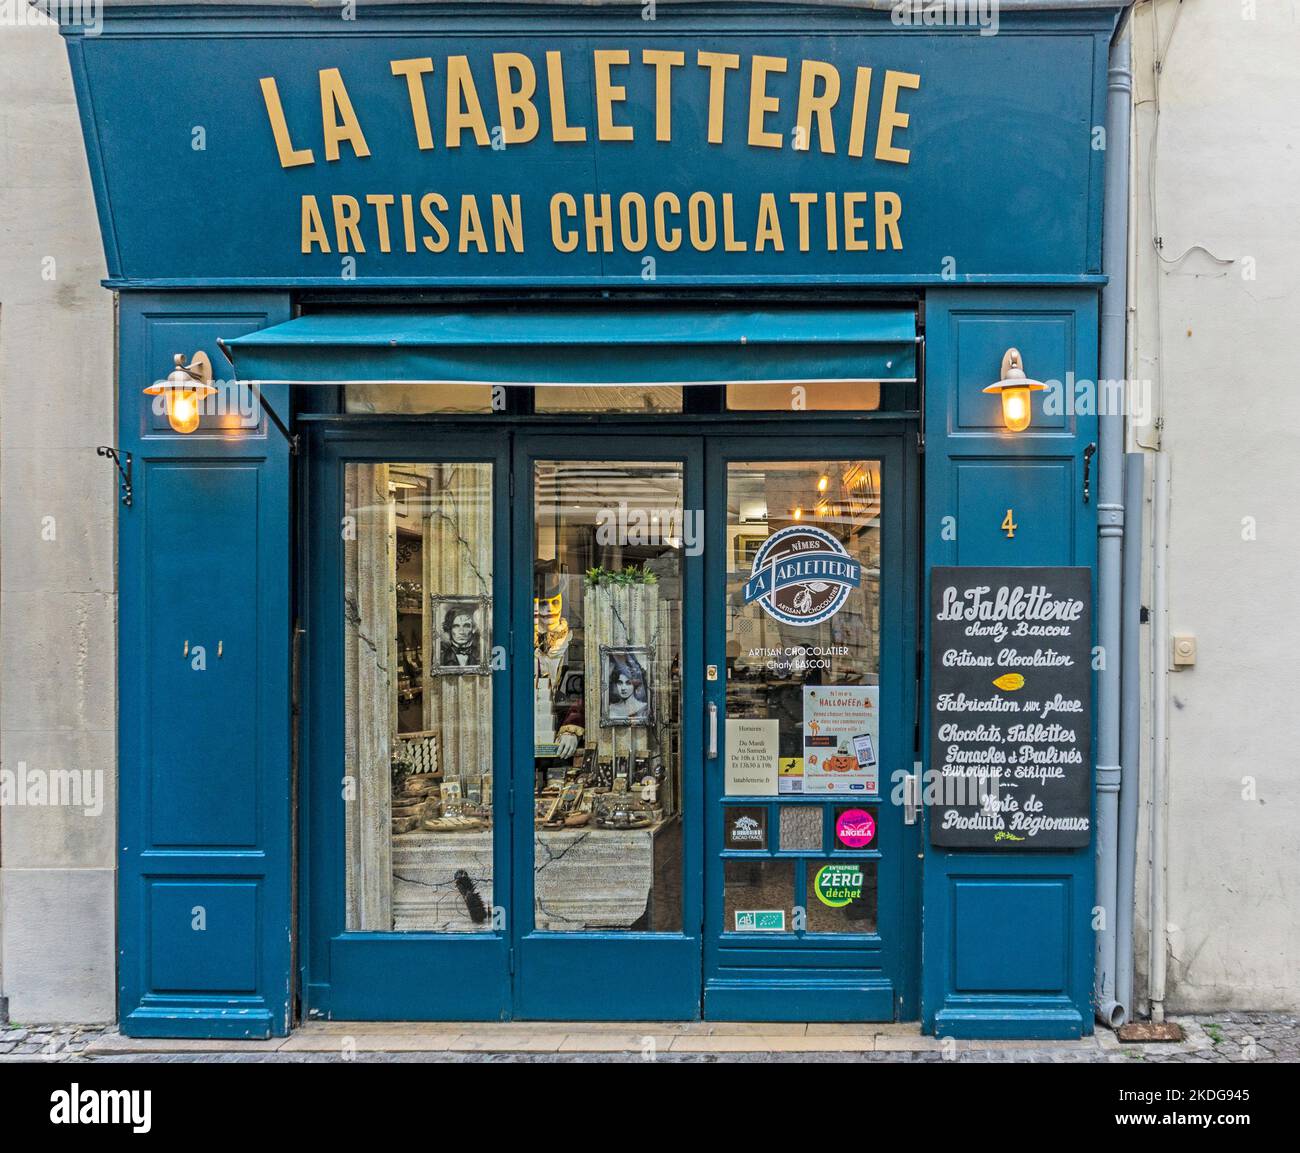 La Tablettterie Artisan Chocolatier in Nimes, Frankreich, Stockfoto